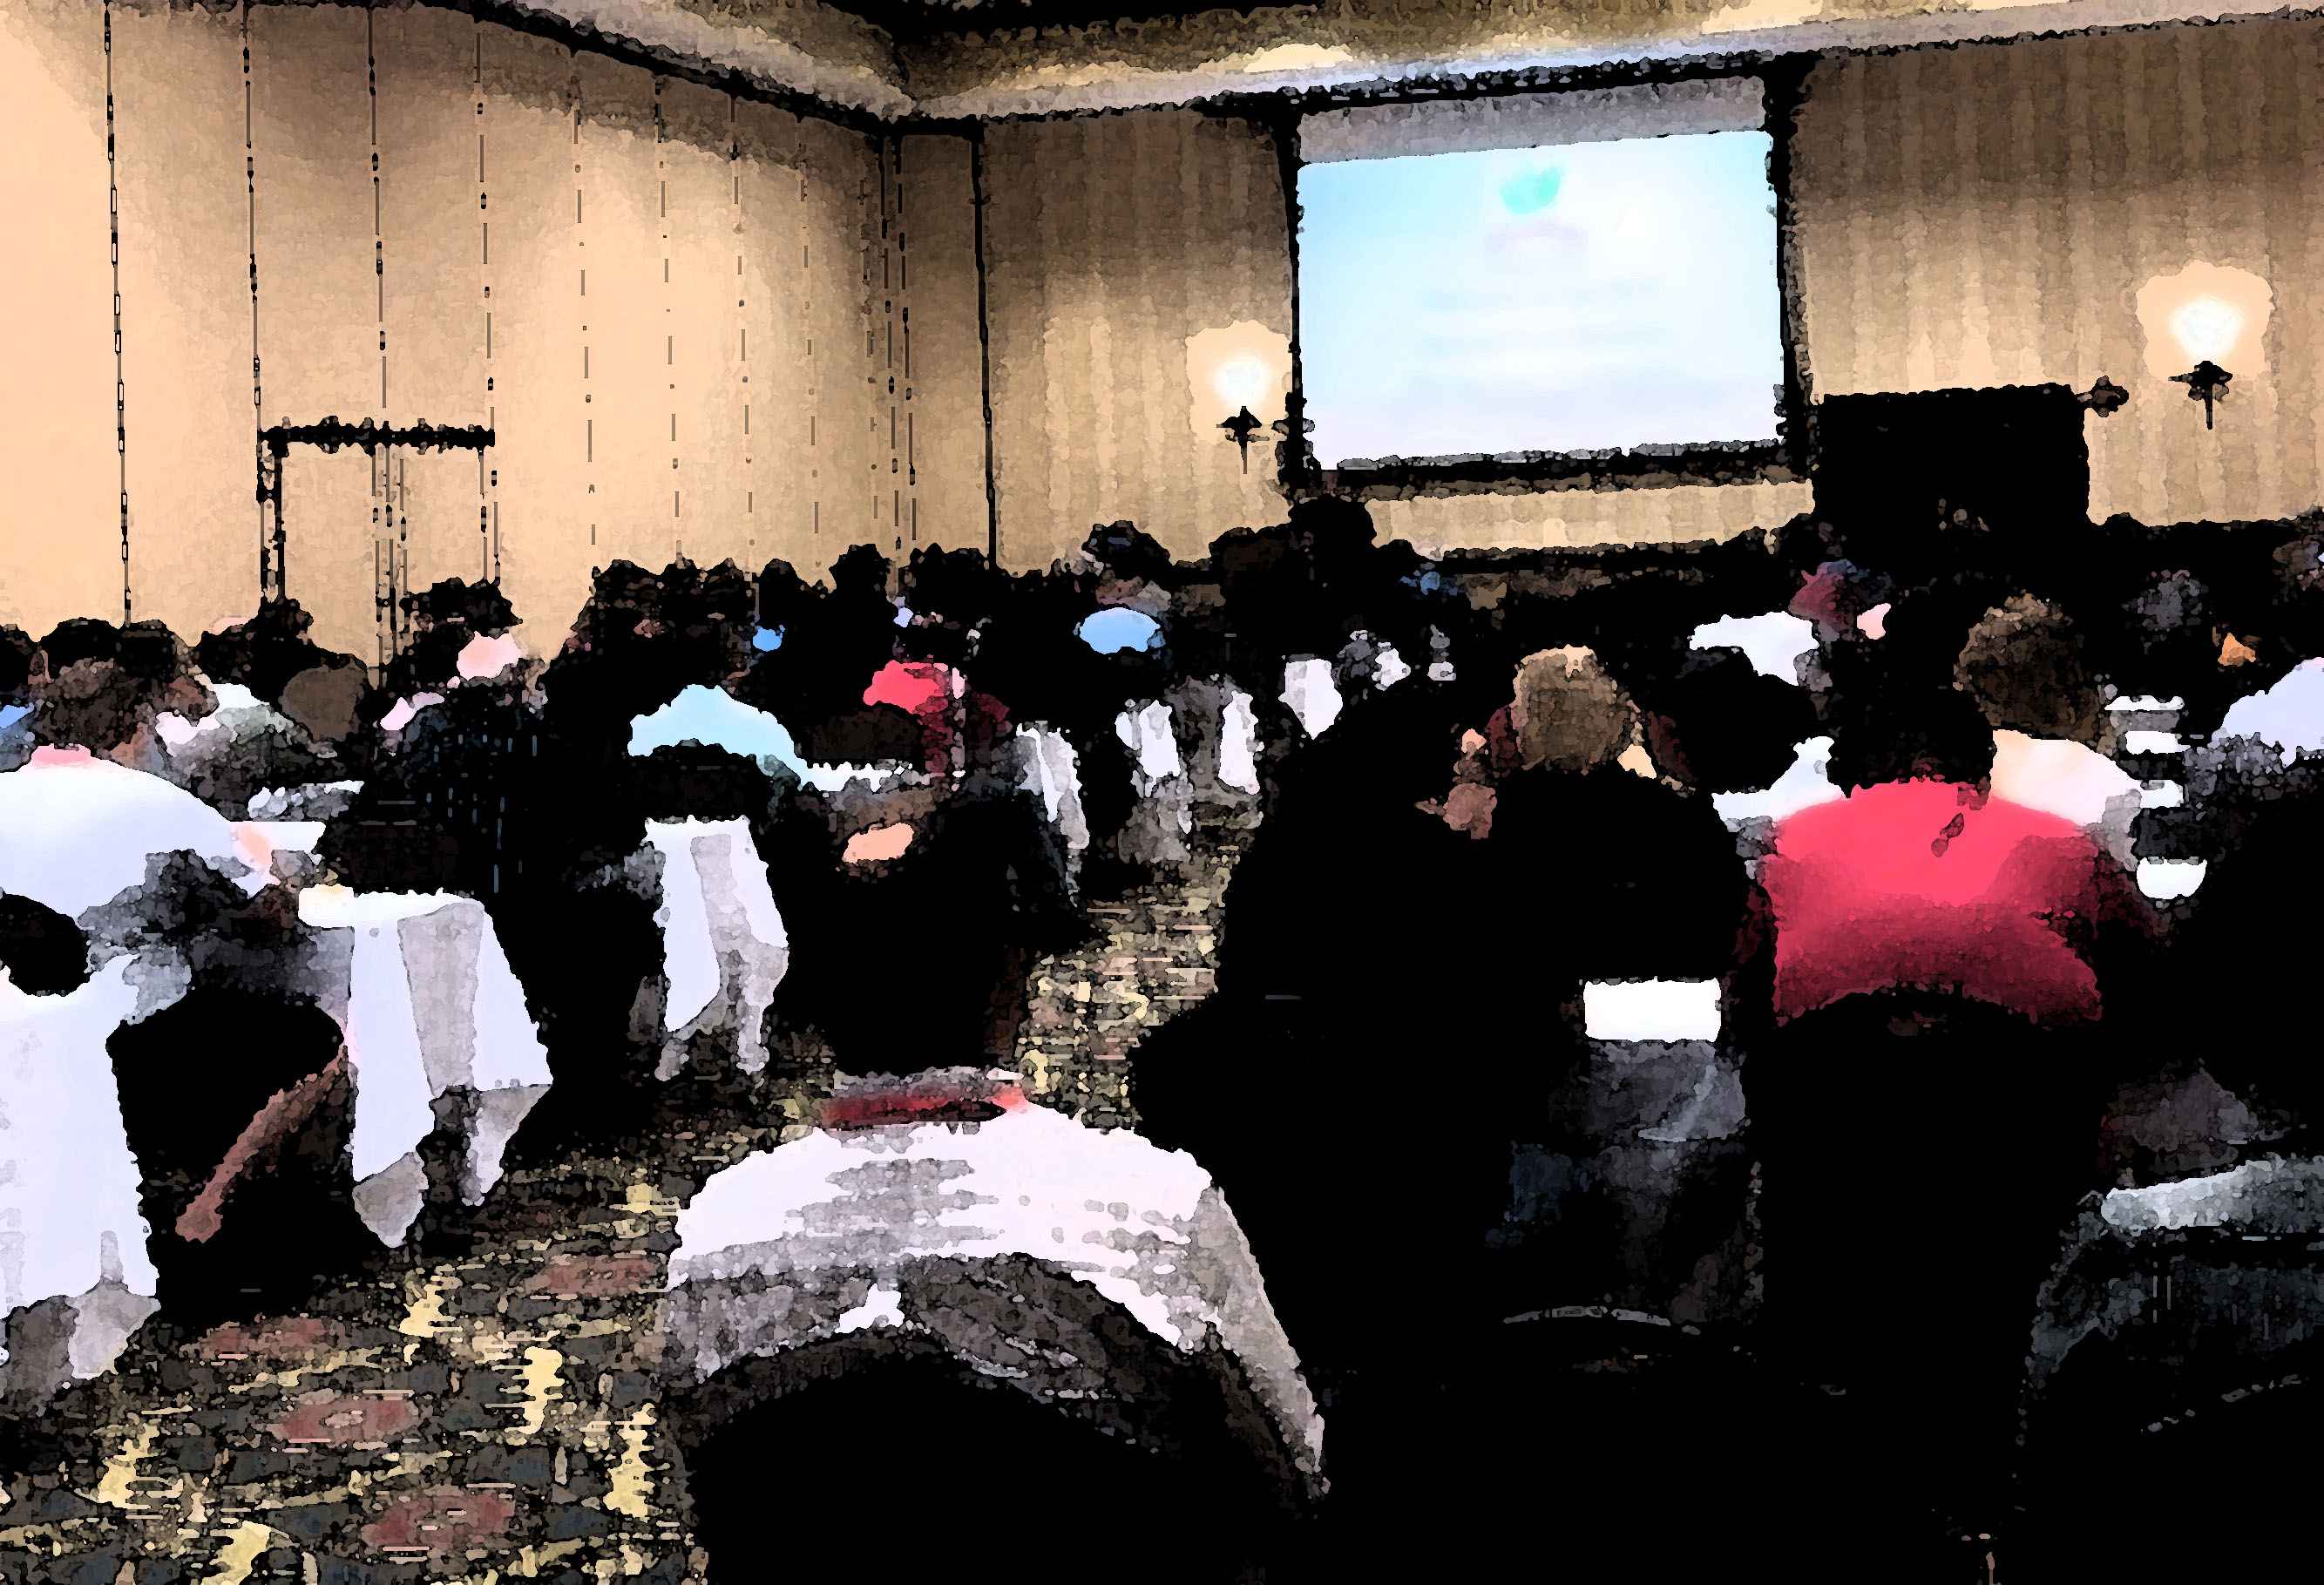 "Conference Presentation" image by Debra Pike, dapike59@gmail.com